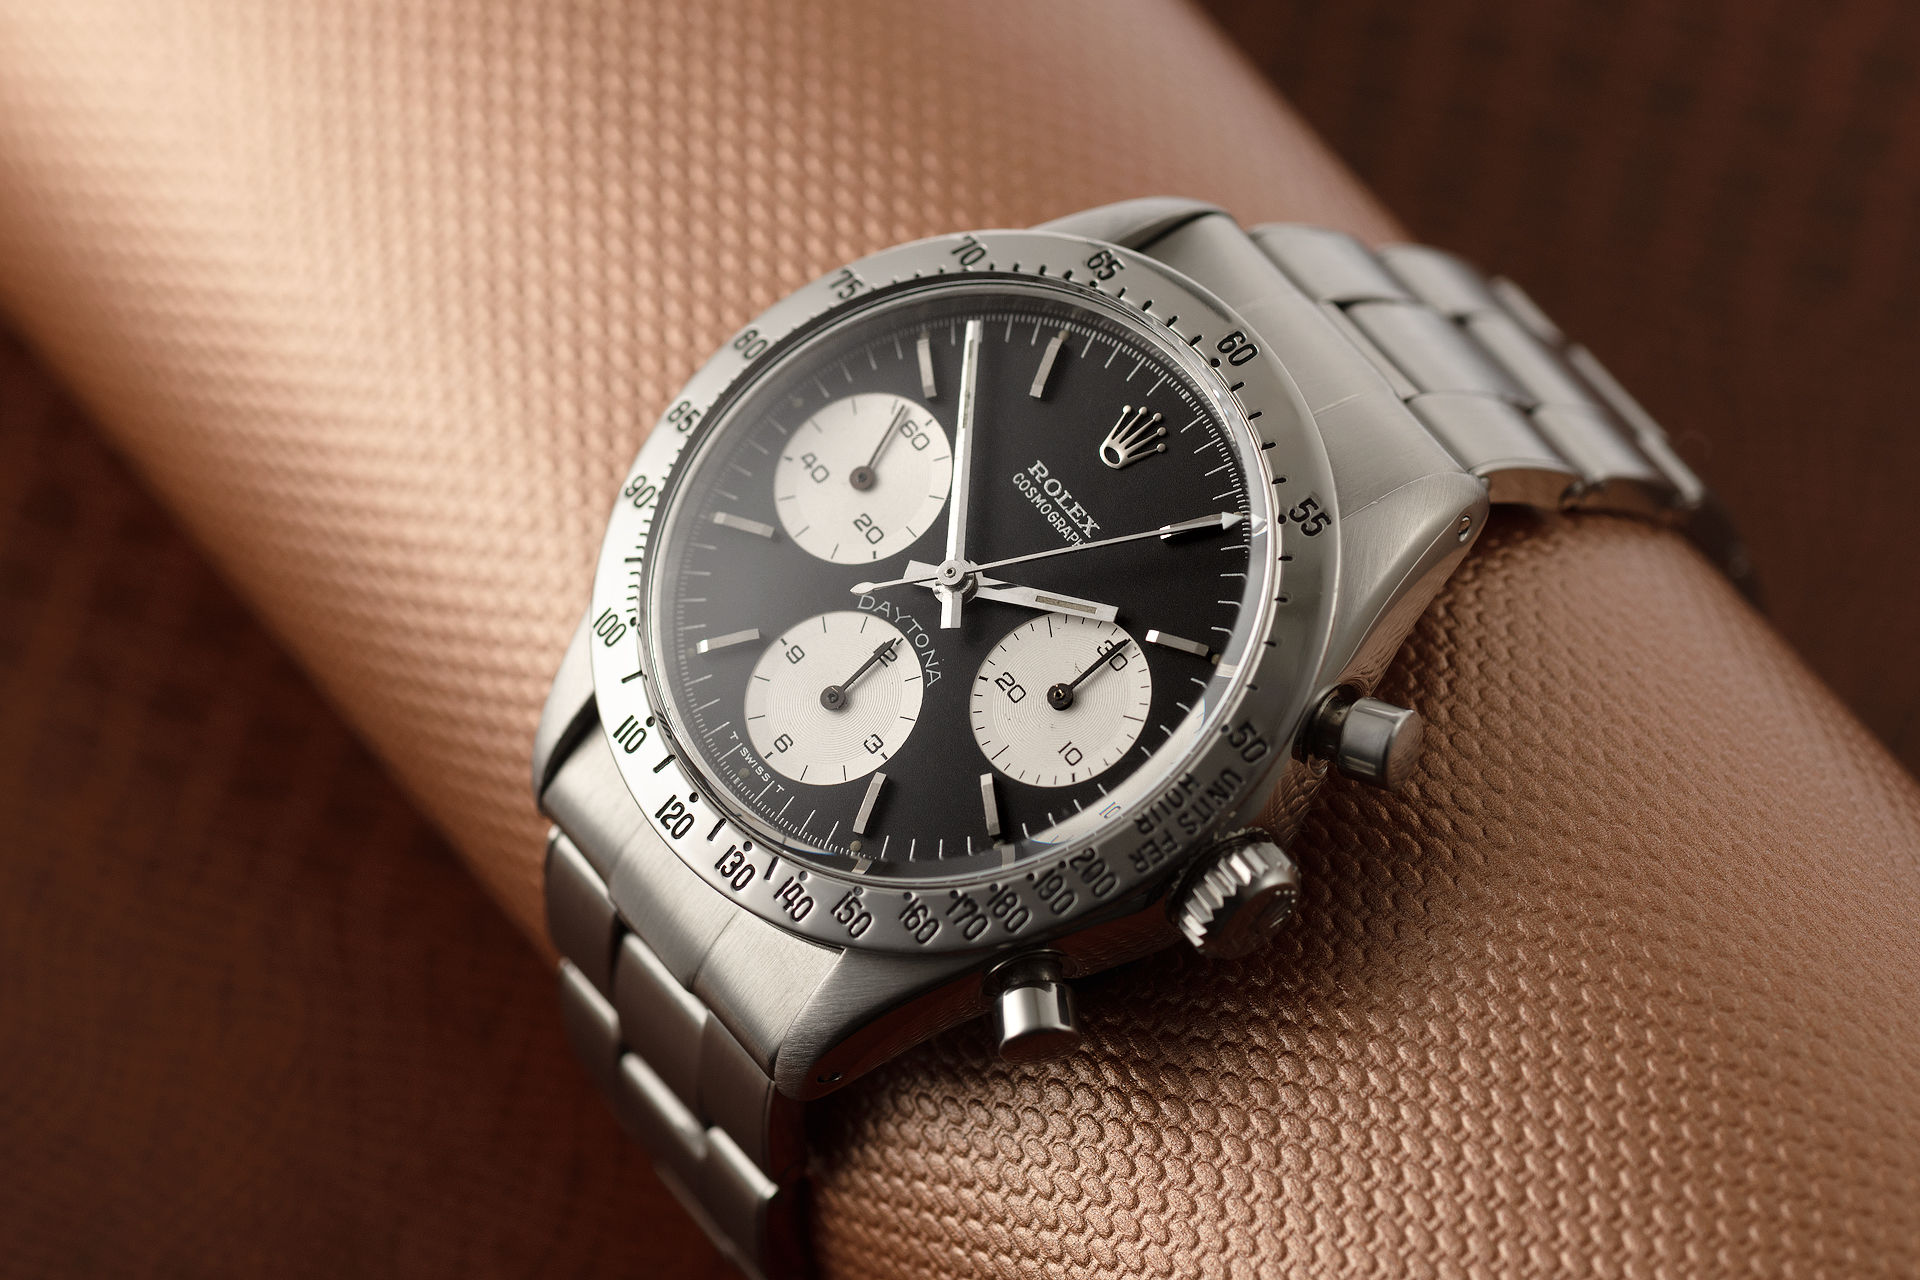 Rolex Cosmograph Daytona | ref 6239 'Stick Hand' The Watch Club